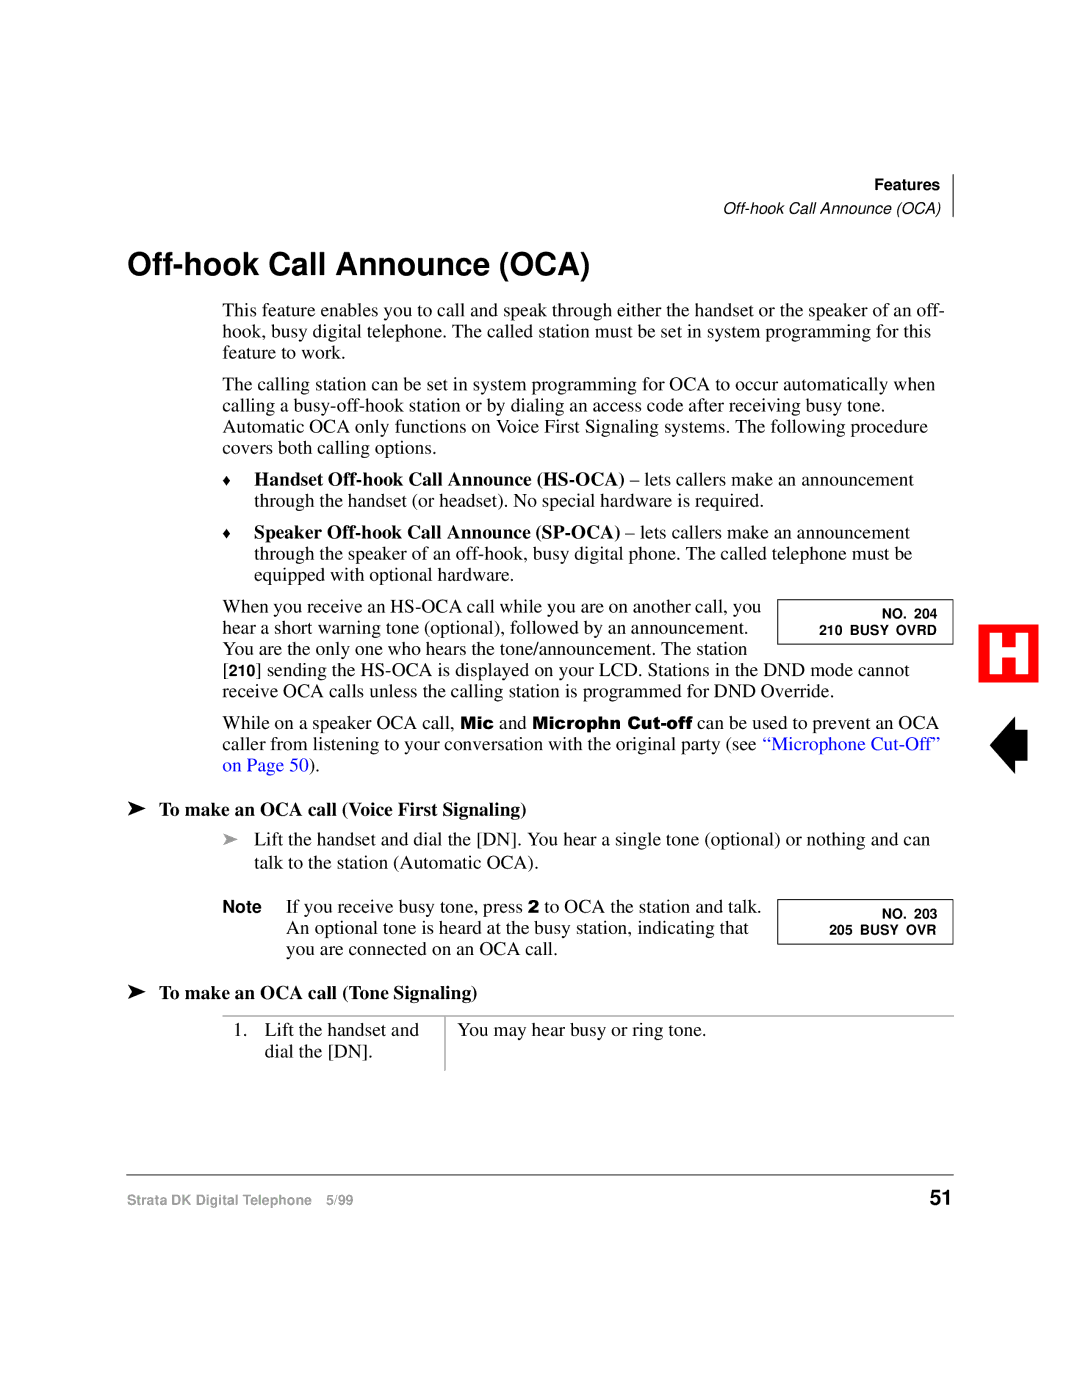 Toshiba Digital Telephone manual Off-hook Call Announce OCA, To make an OCA call Voice First Signaling 